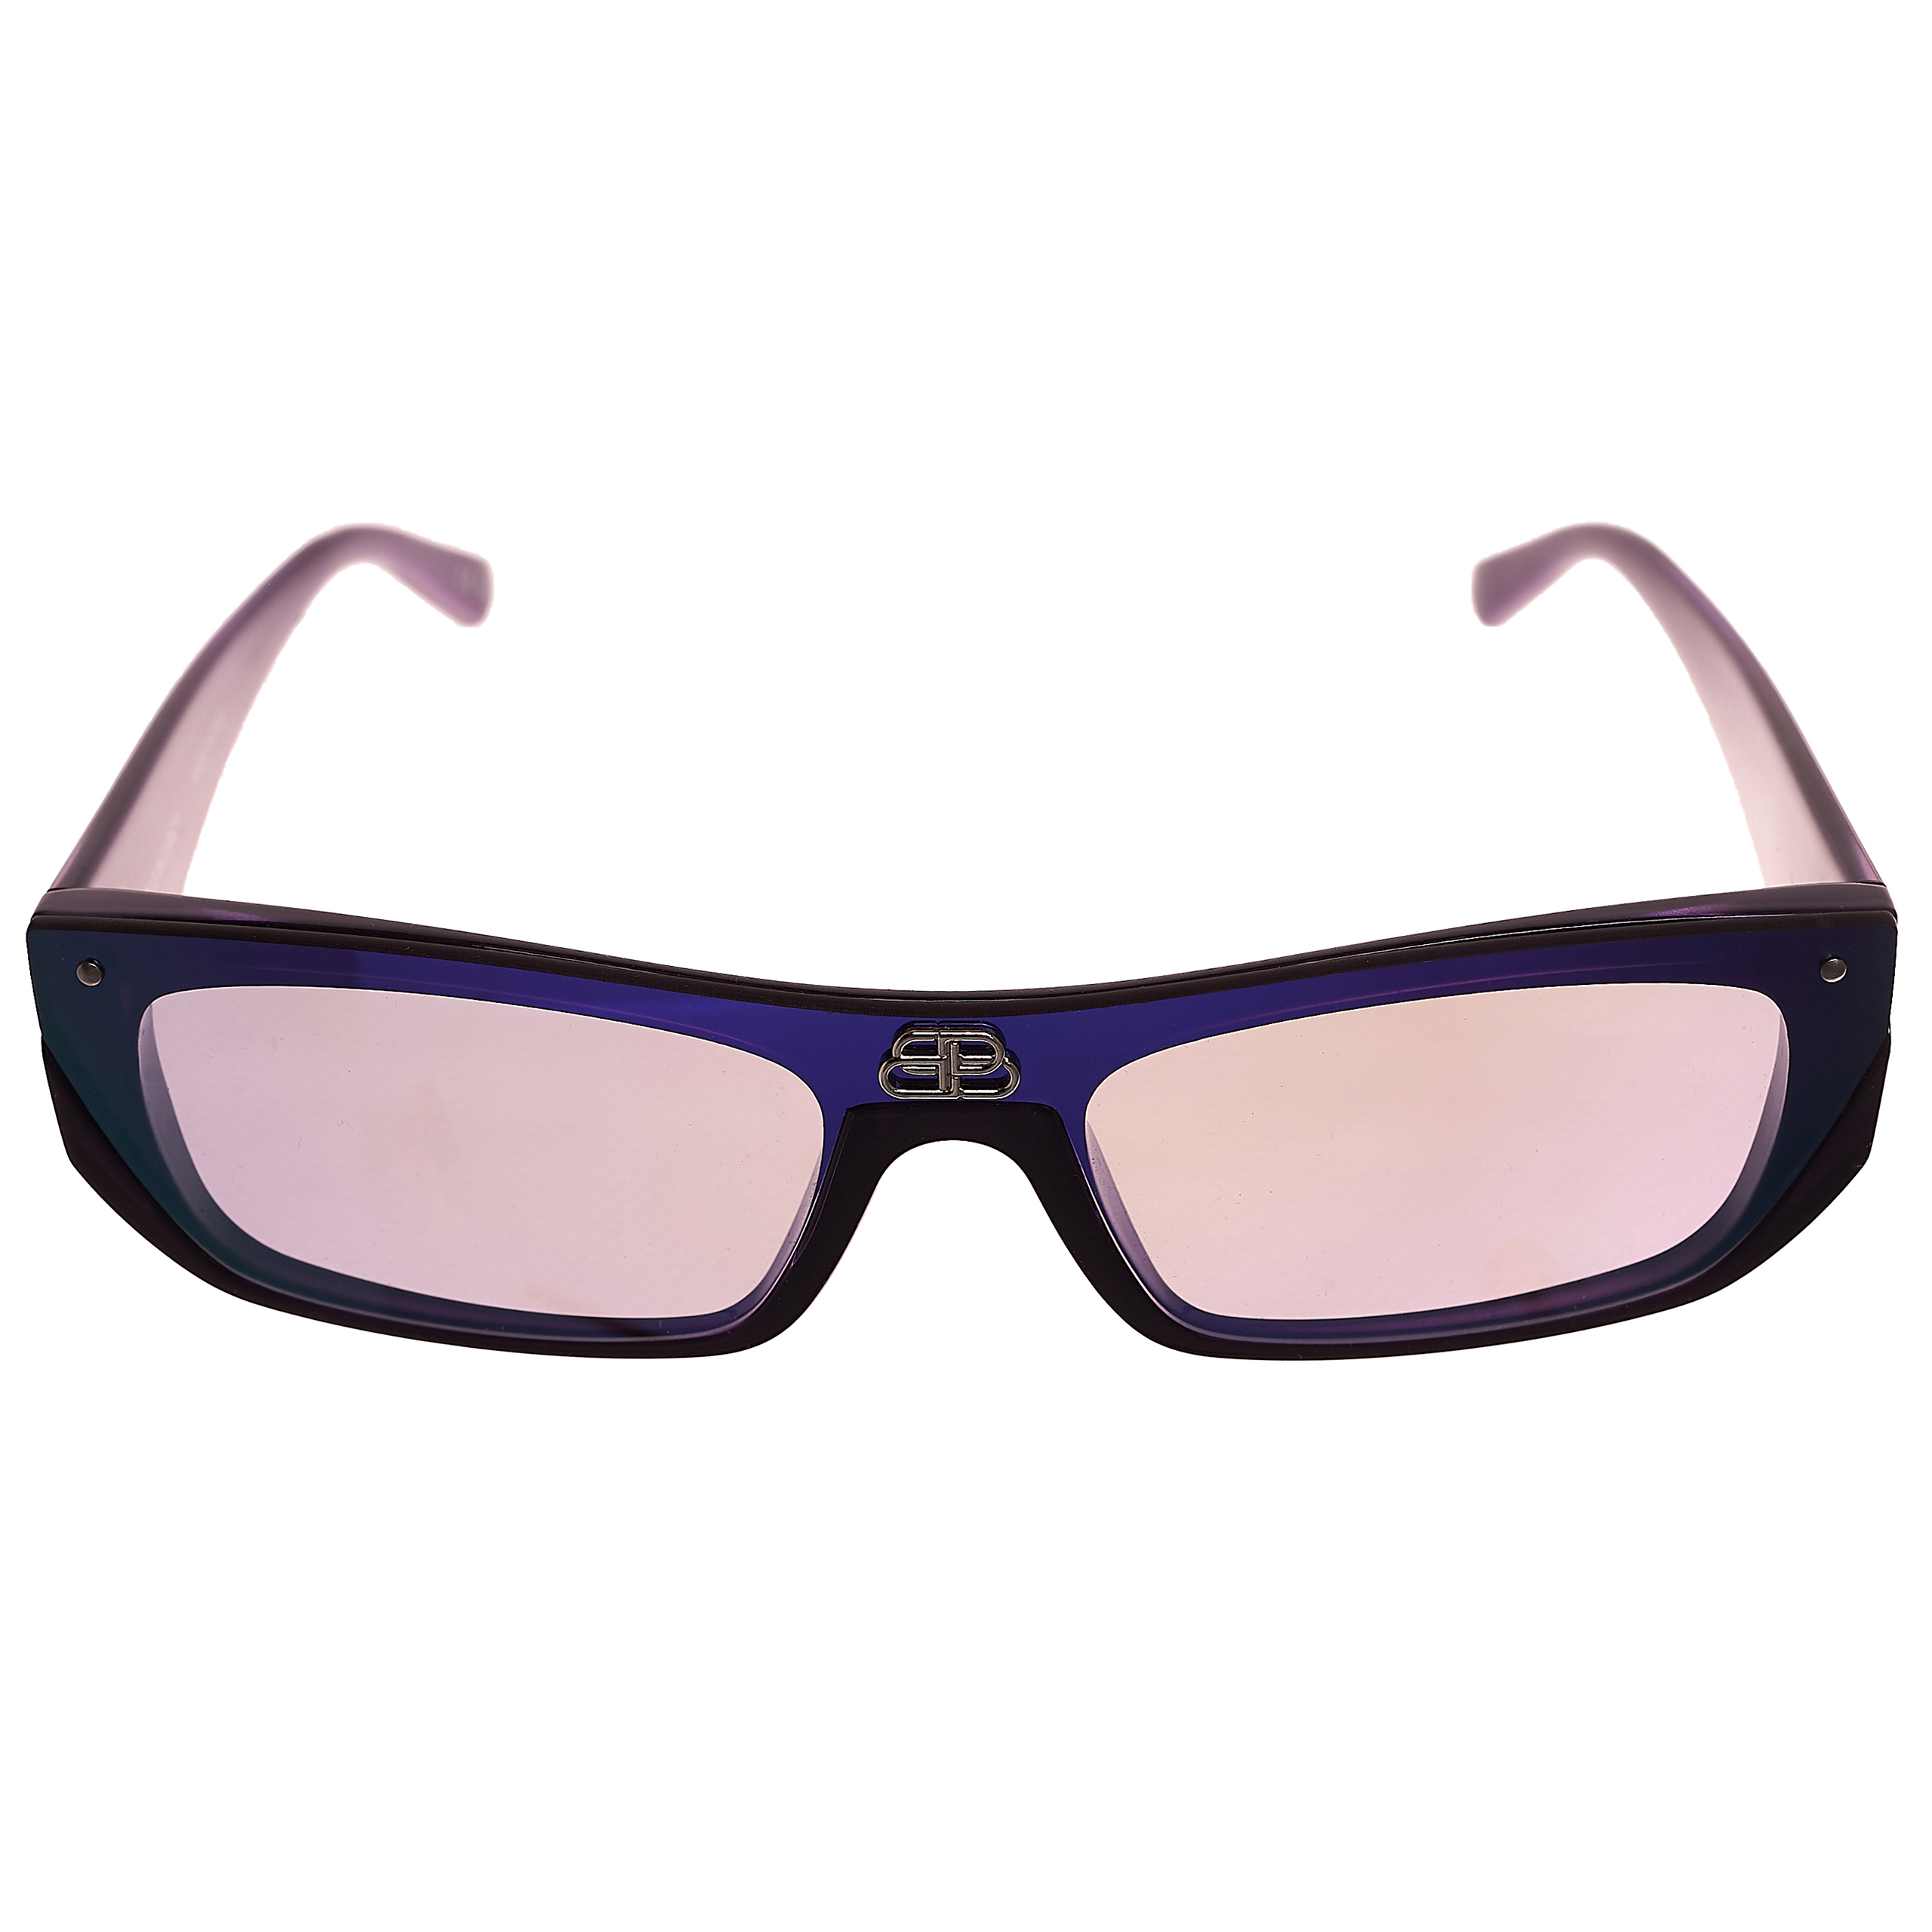 Фиолетовые очки с логотипом Balenciaga 609370/T0003/5067, размер One Size 609370/T0003/5067 - фото 1